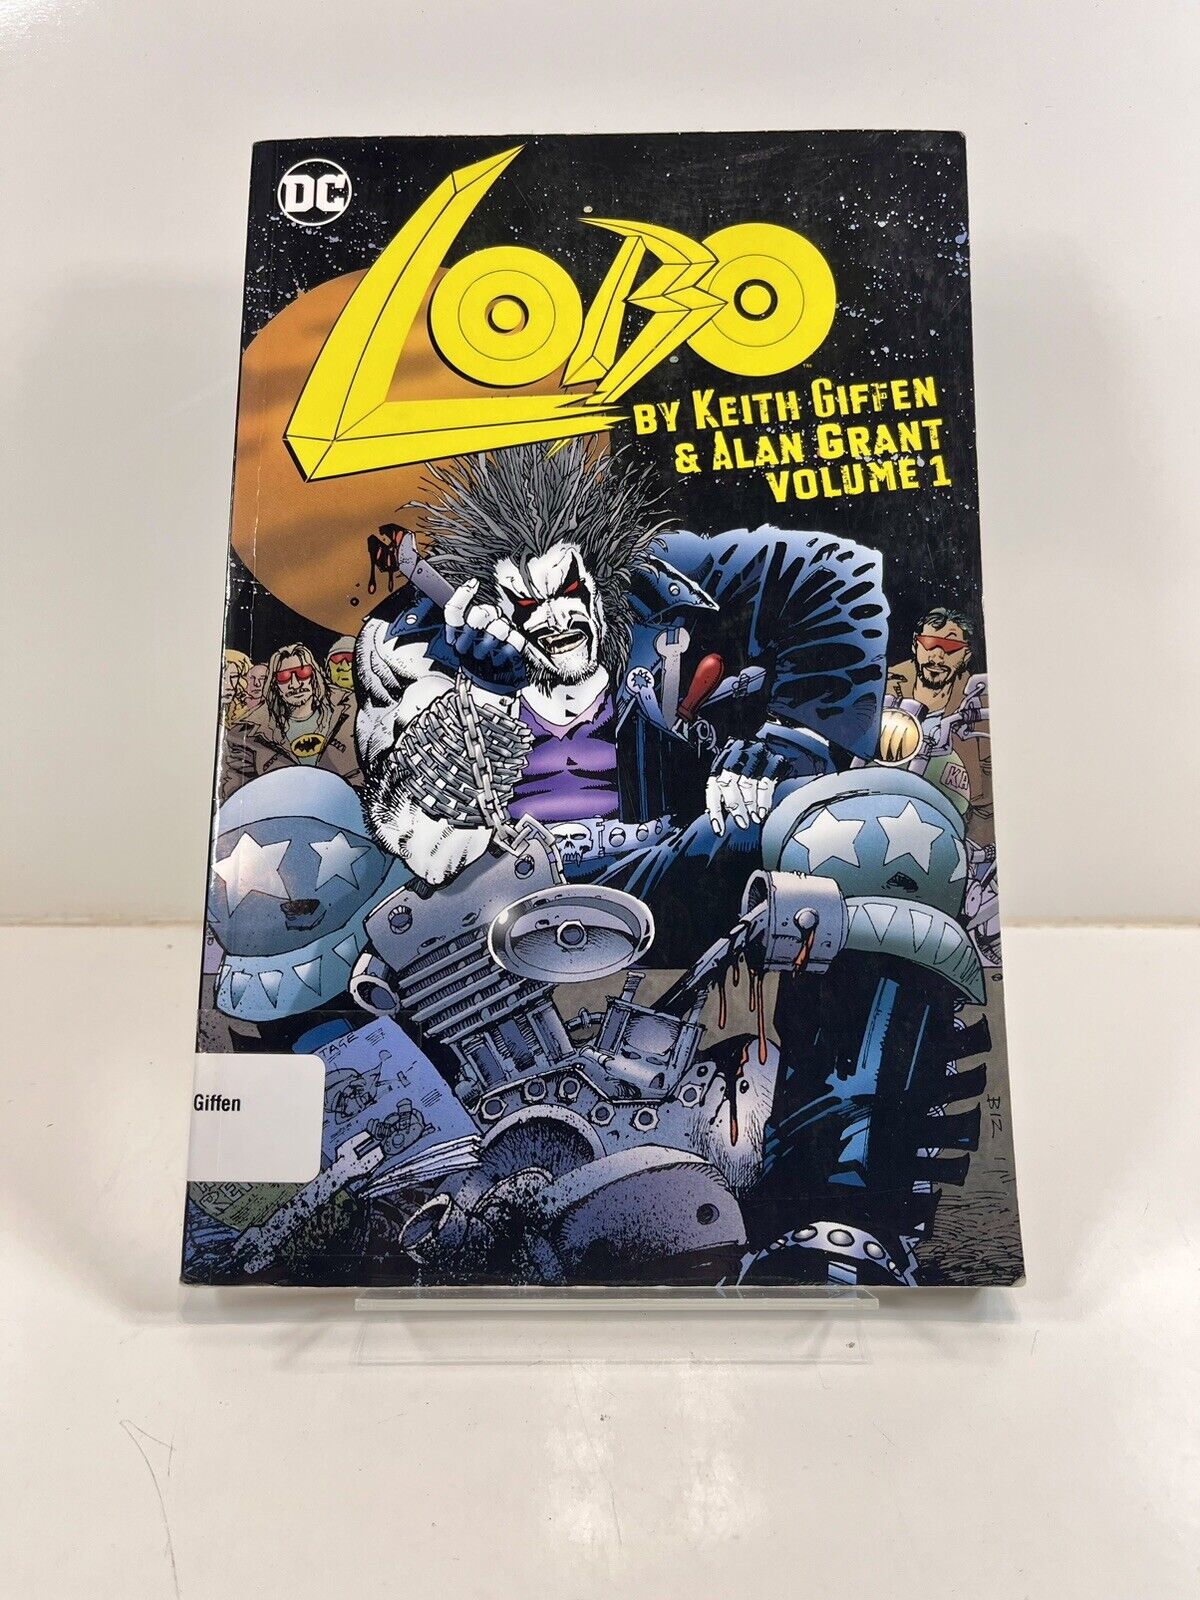 Lobo by Keith Giffen & Alan Grant Vol. 1 by Keith Giffen: Ex-Lib